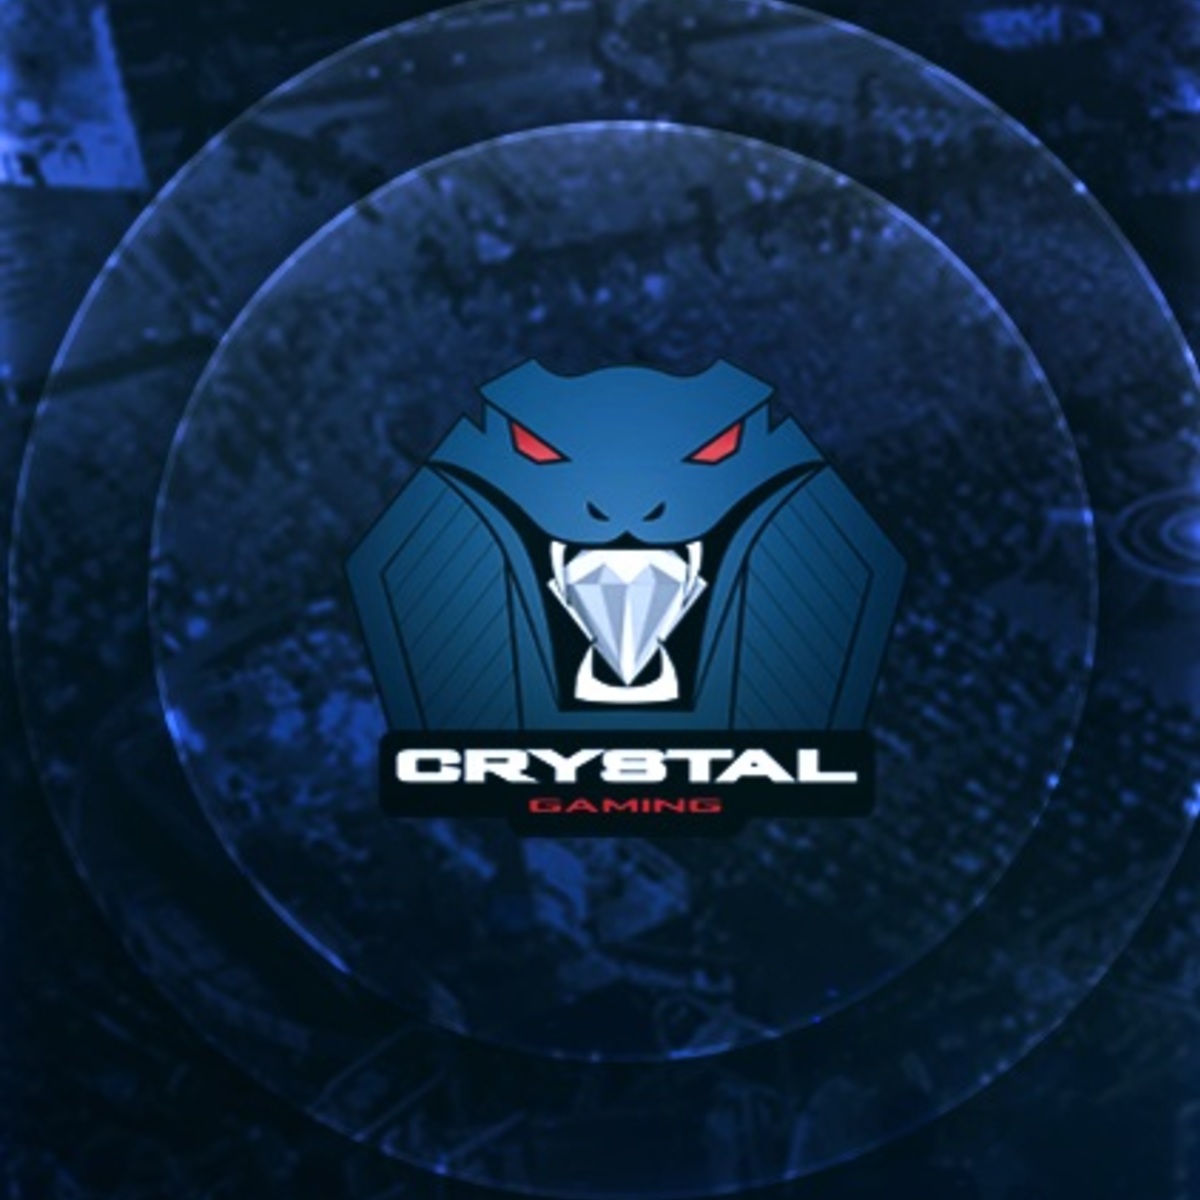 Crystal gaming. Crystal Team. Аватарки для турнира Кристалл. Хрусталь команда. Логотип UT С кристаллом.